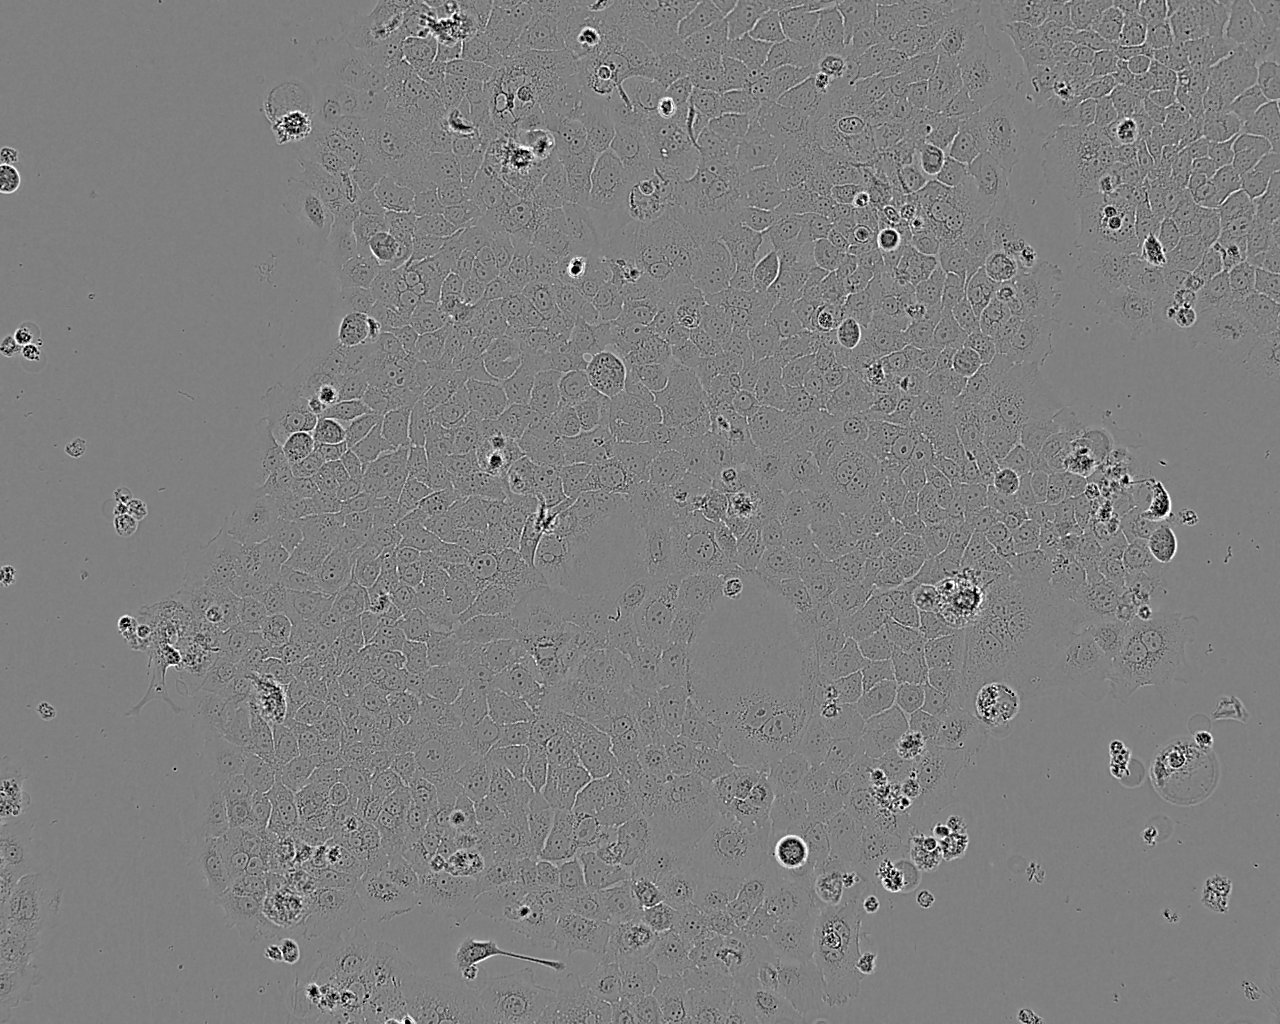 MDA-PCa-2b epithelioid cells人前列腺癌细胞系